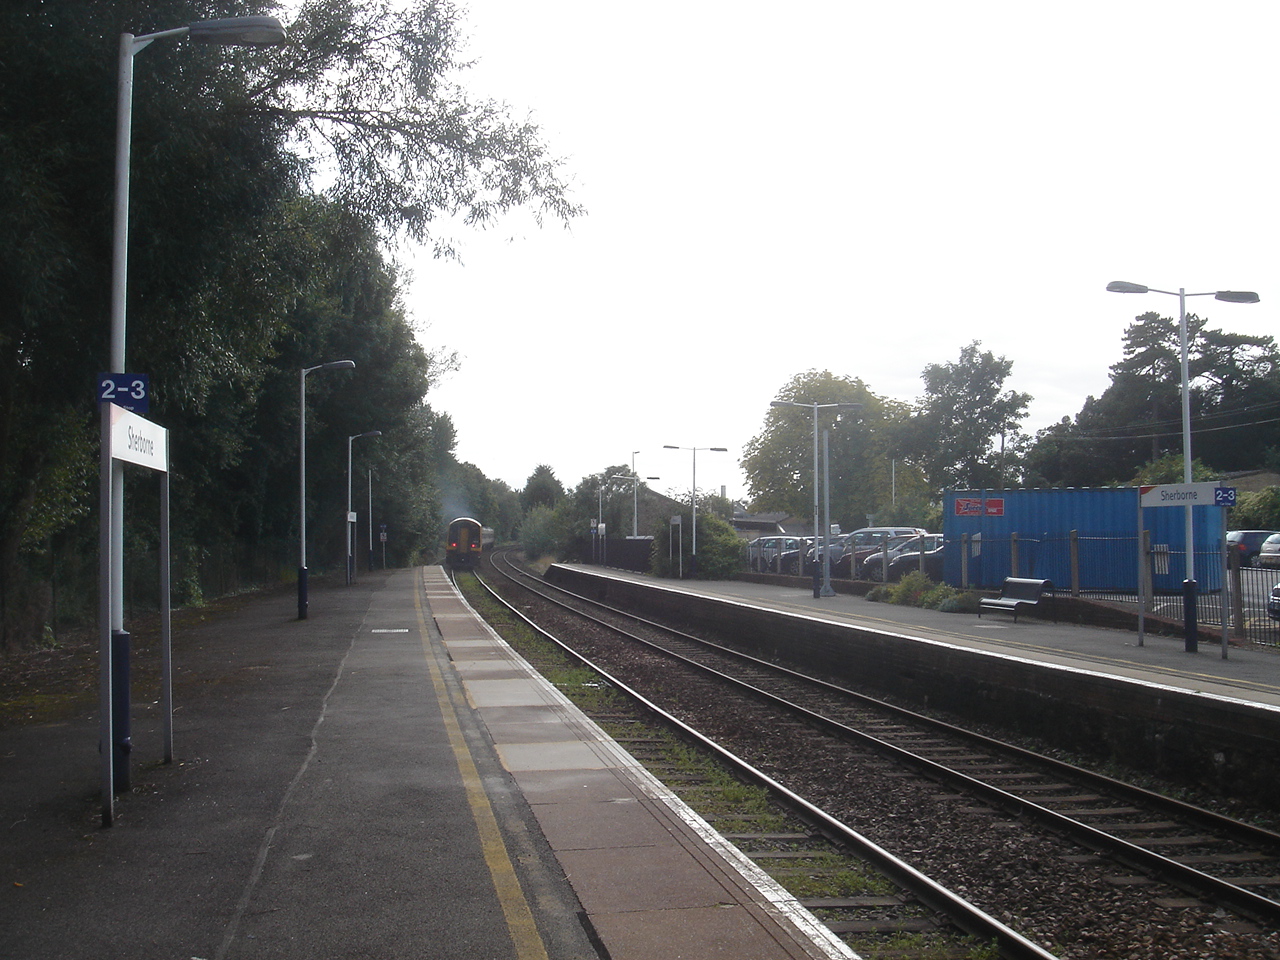 a train track next to a train platform